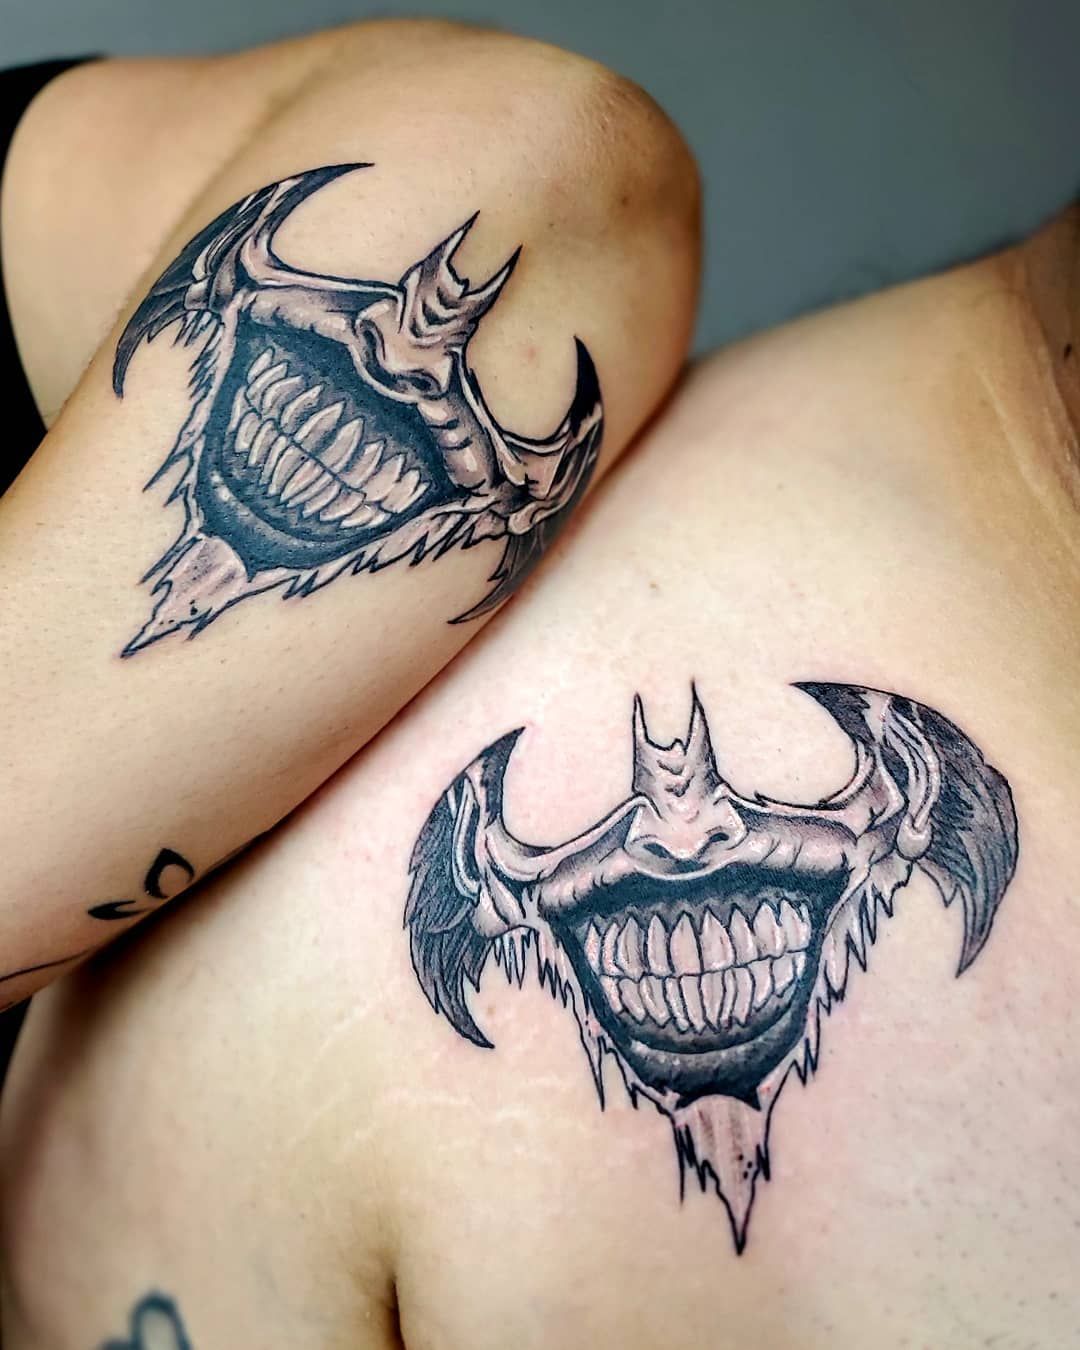 20+ Unique Batman Tattoo Ideas to Inspire You - Tattoos Free